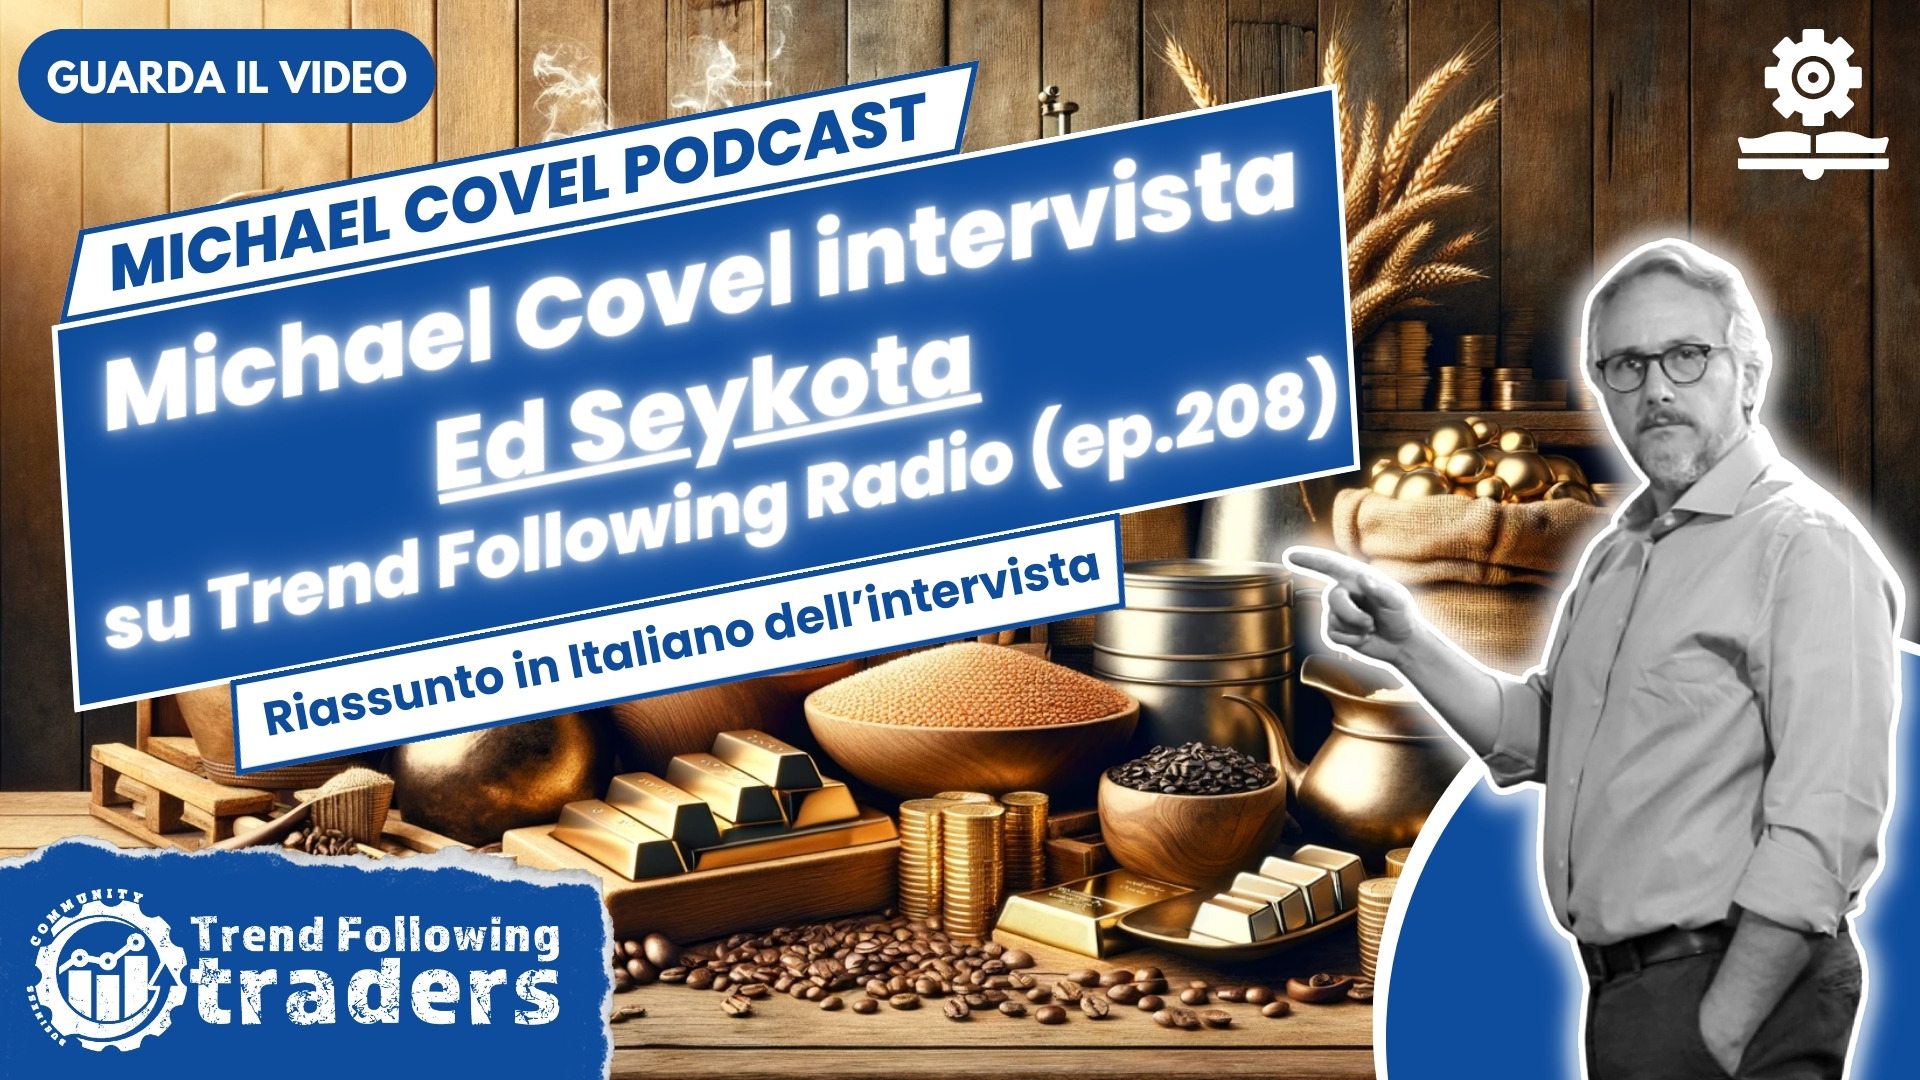 Michael Covel intervista Ed Seykota su Trend Following Radio (ep.208)